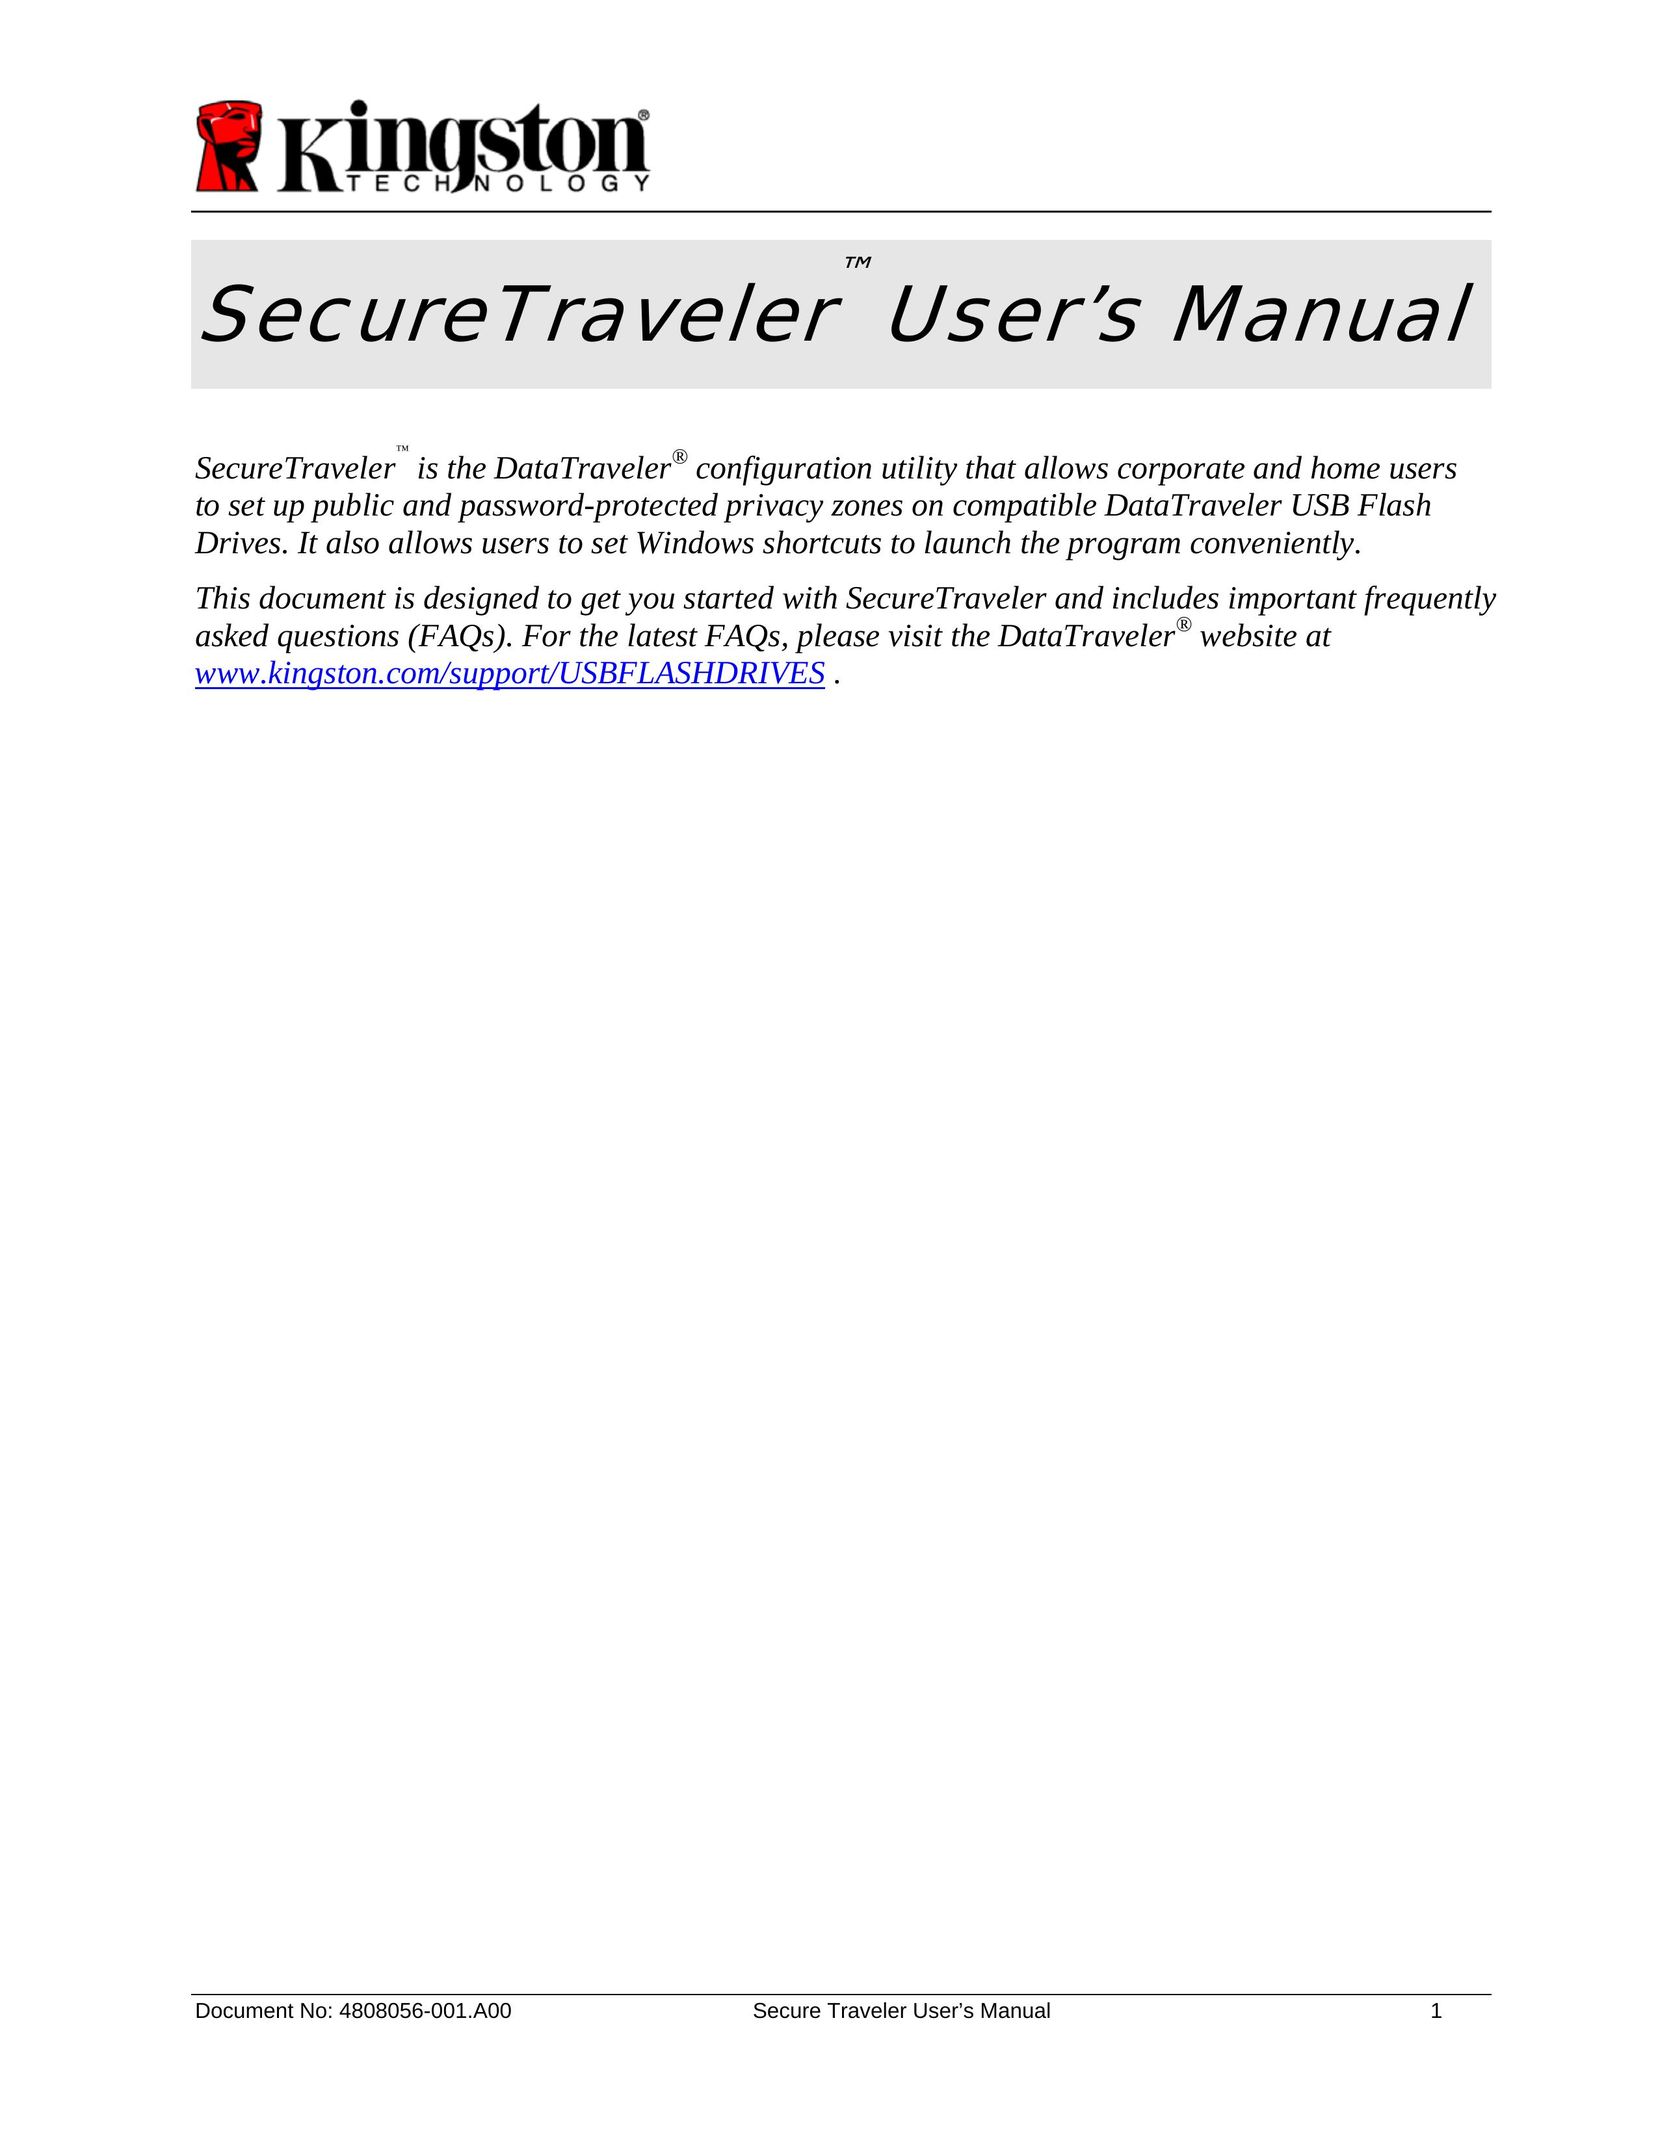 Kingston Technology SecureTraveler Computer Drive User Manual